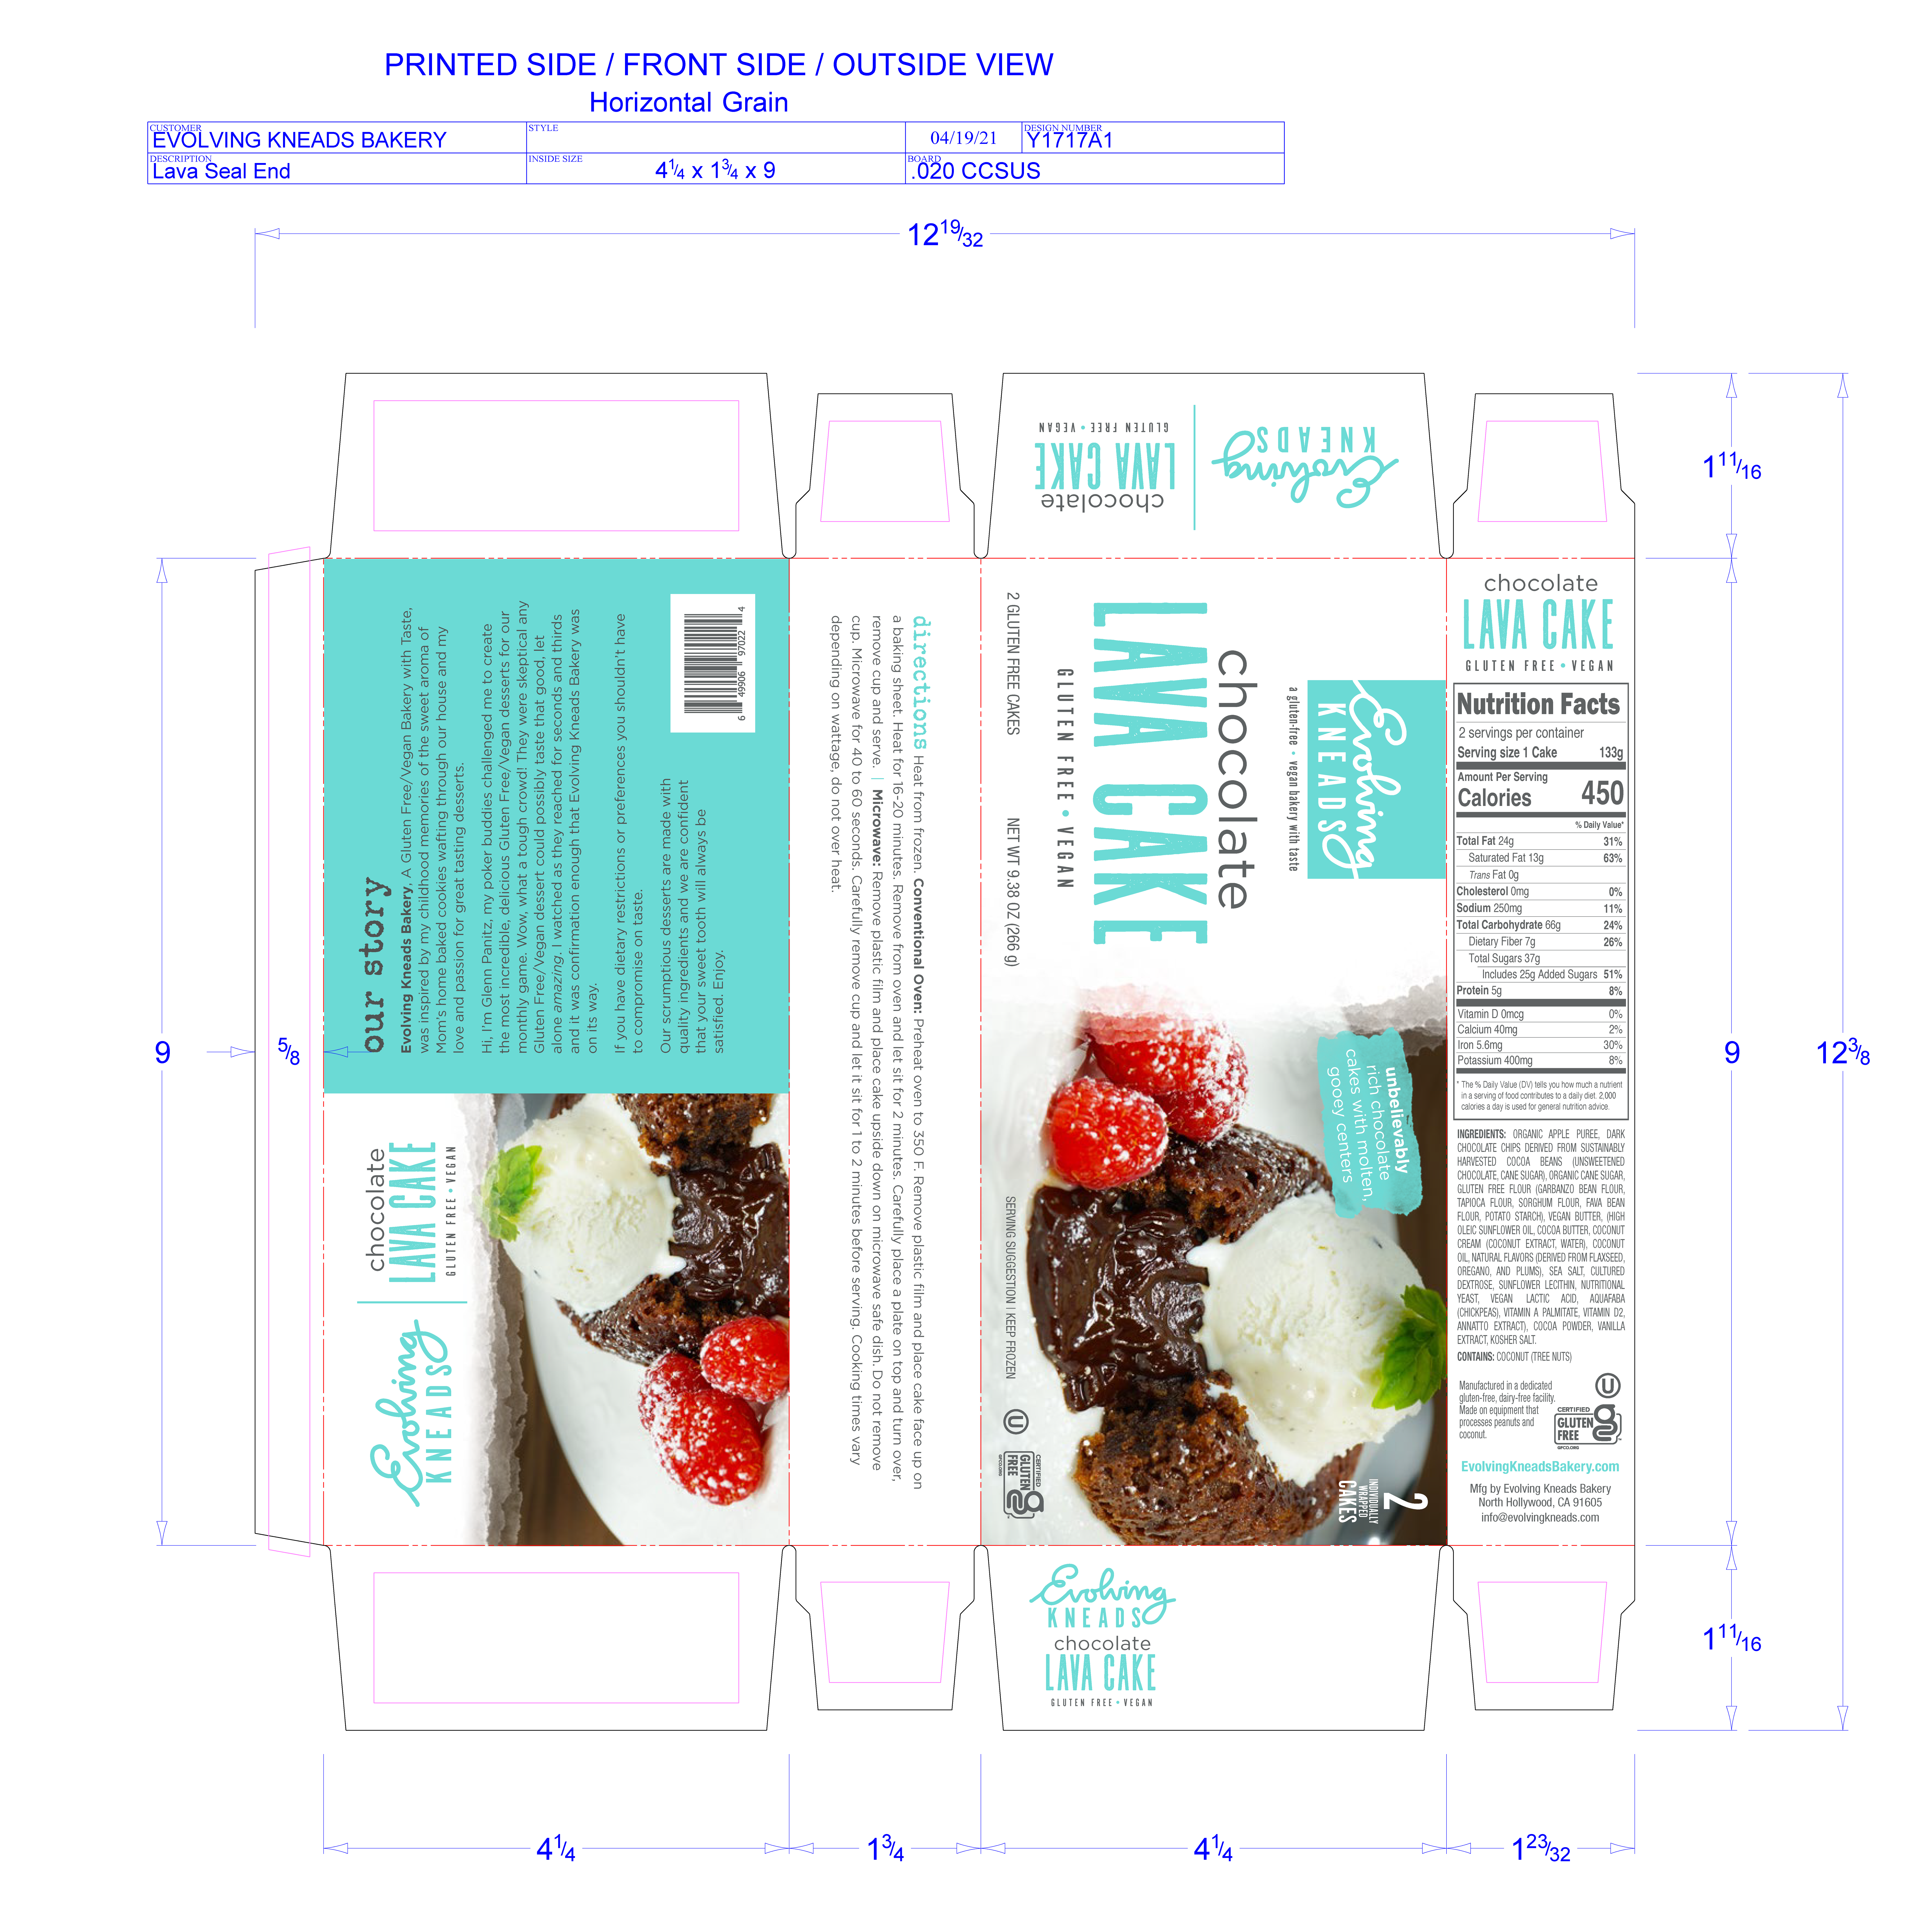 Evolving Kneads GFV Chocolate Lava Cake 6 units per case 9.4 oz Product Label